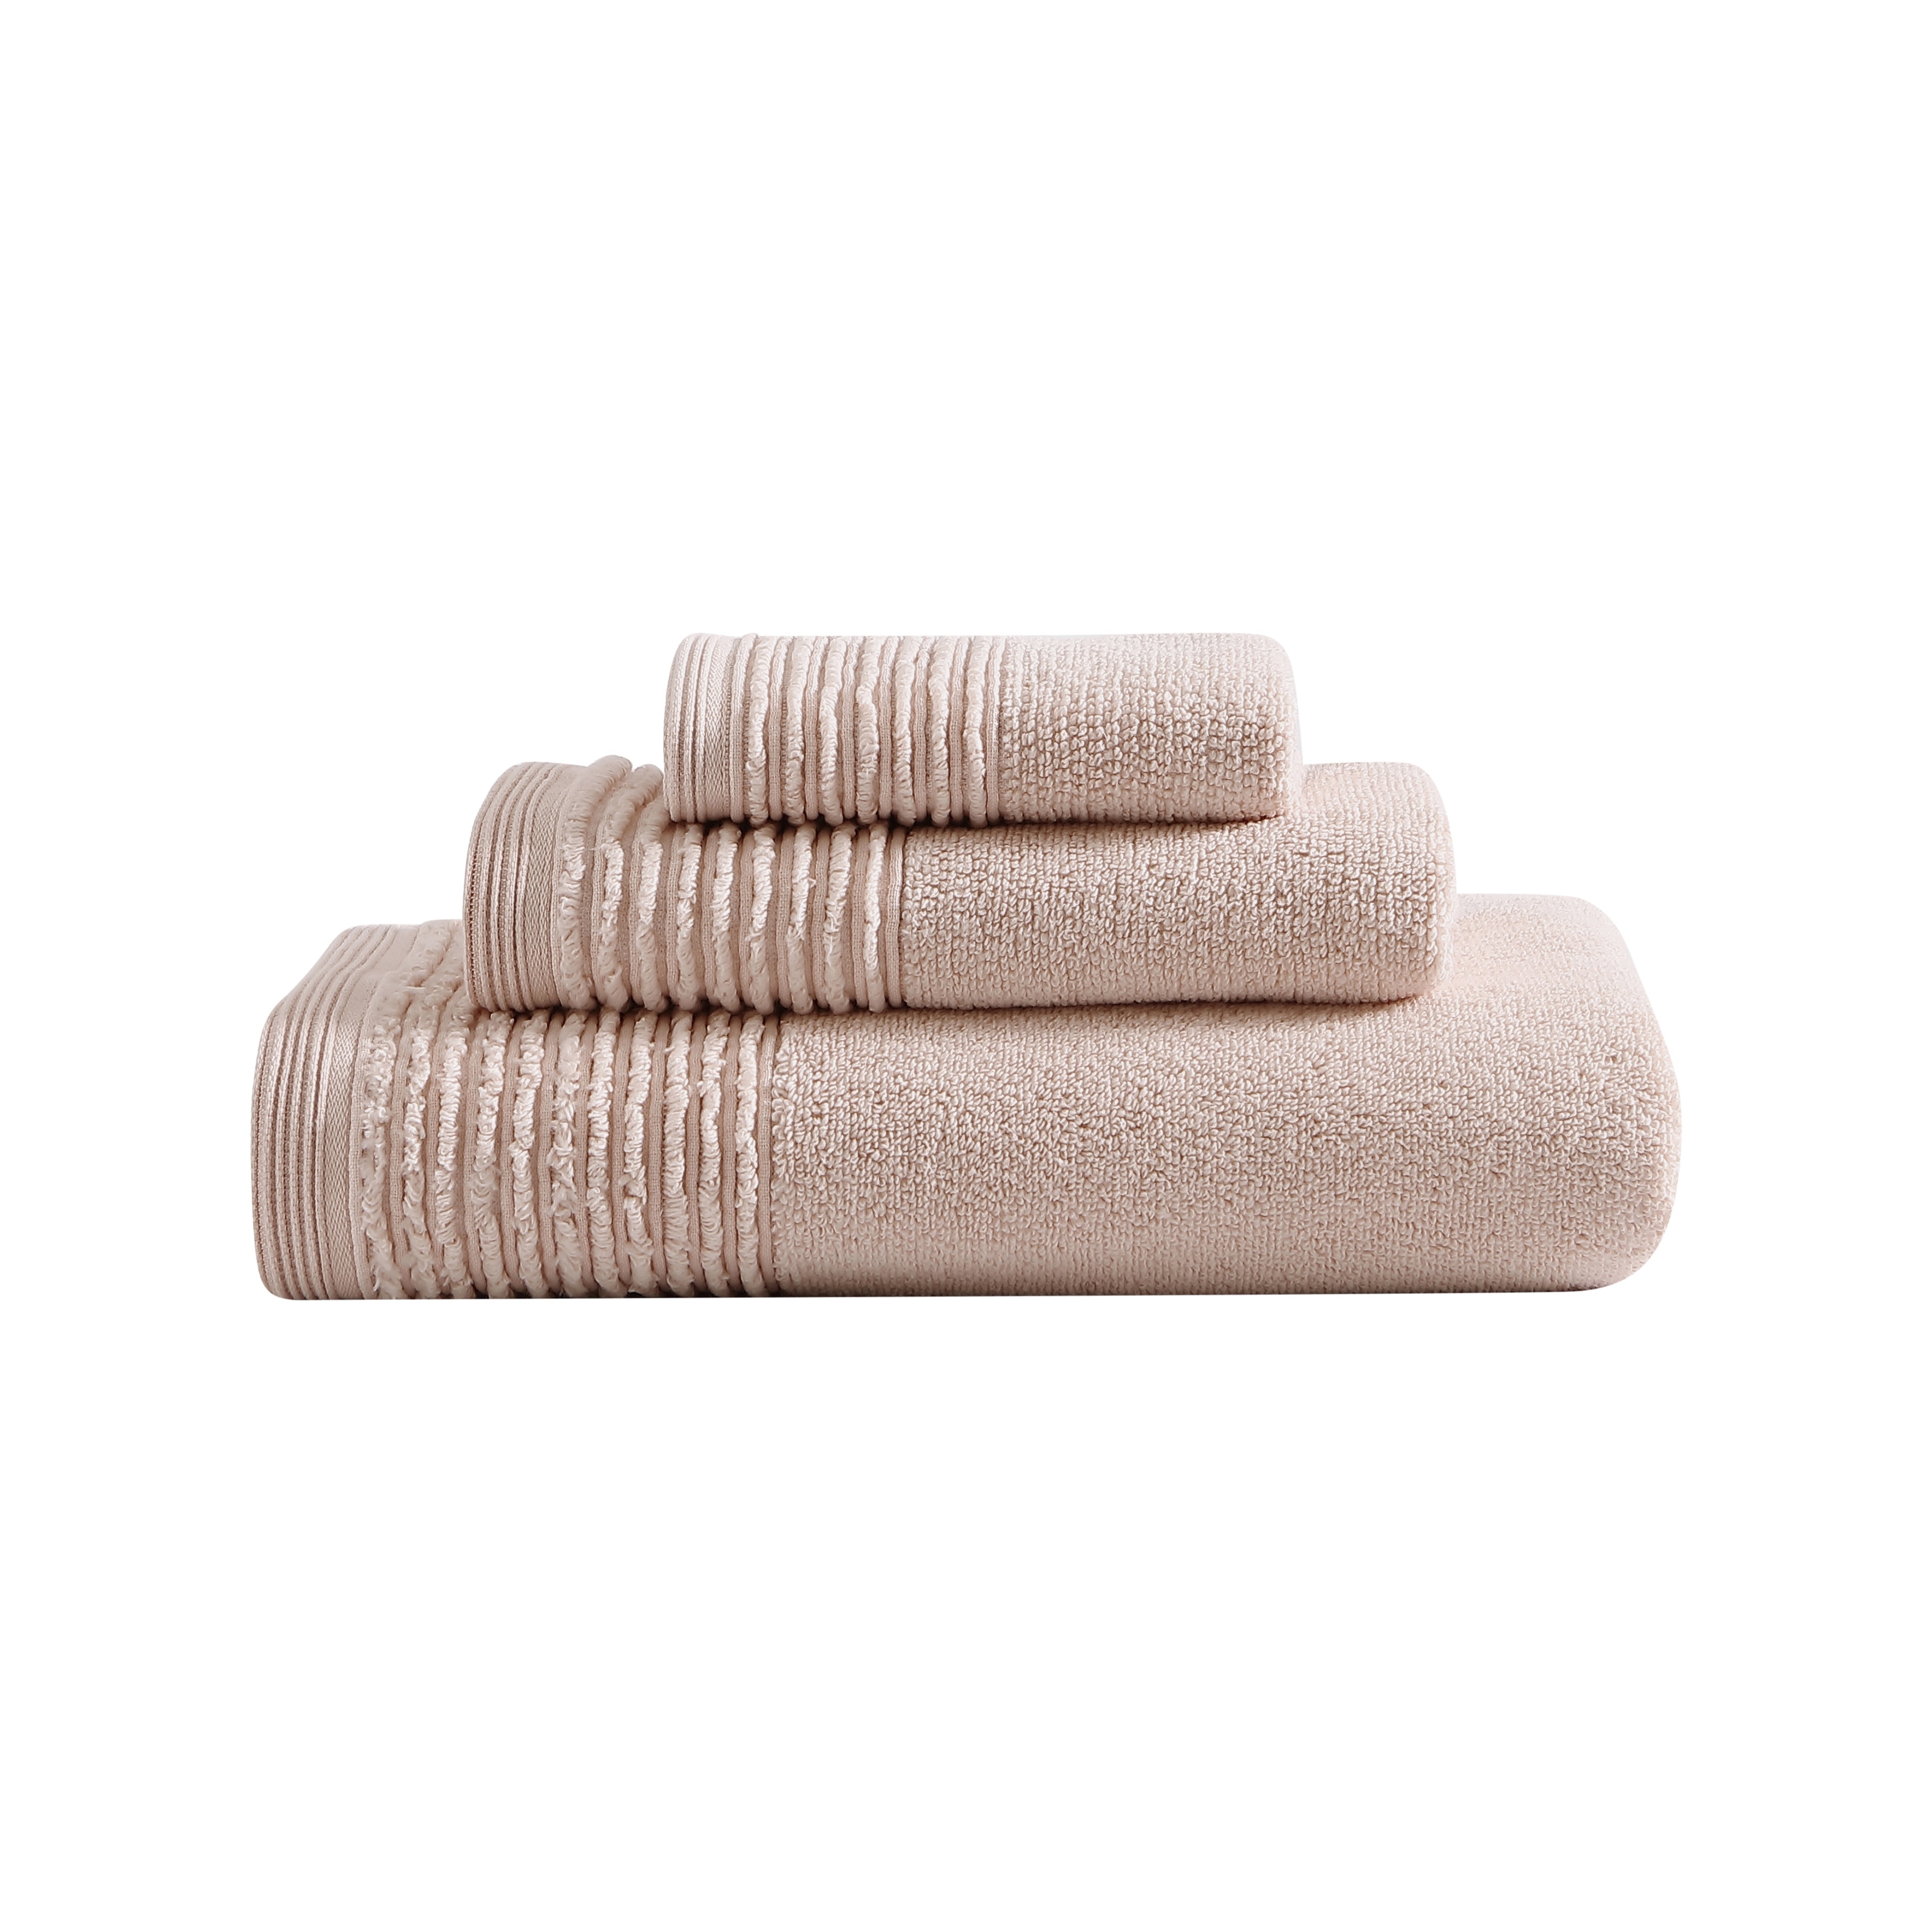 https://ak1.ostkcdn.com/images/products/is/images/direct/359cbd116b43da955ddef097e933cd7eb38d51b7/Vera-Wang-Sculpted-Pleat-Solid-Cotton-Multi-Size-Towel-Set.jpg